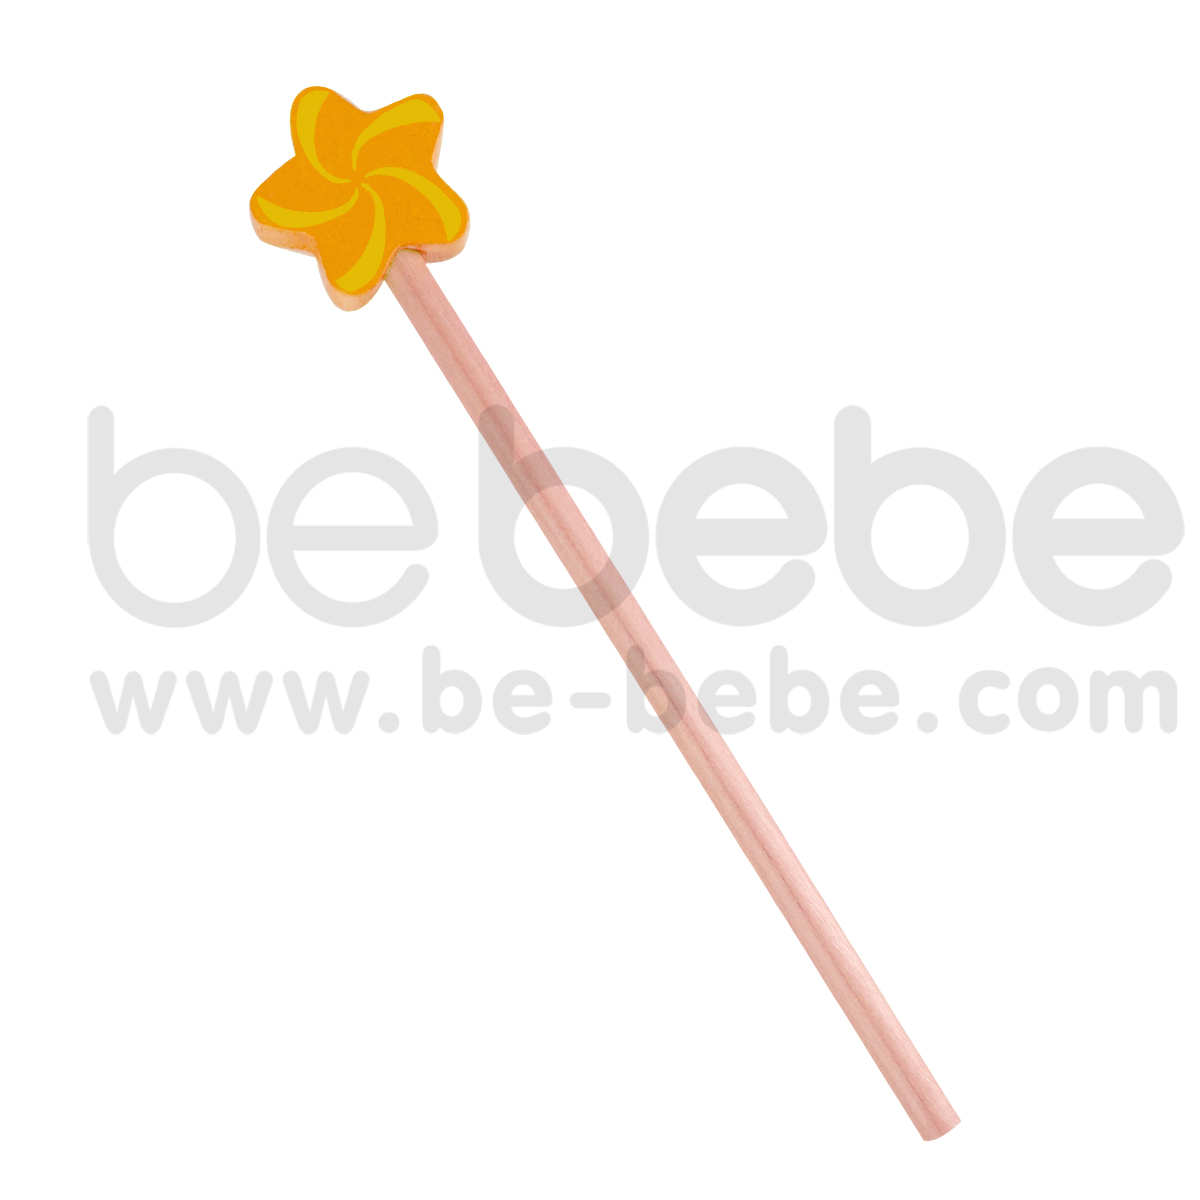 bebebe : ดินสอS ดาวกังหัน/ส้ม